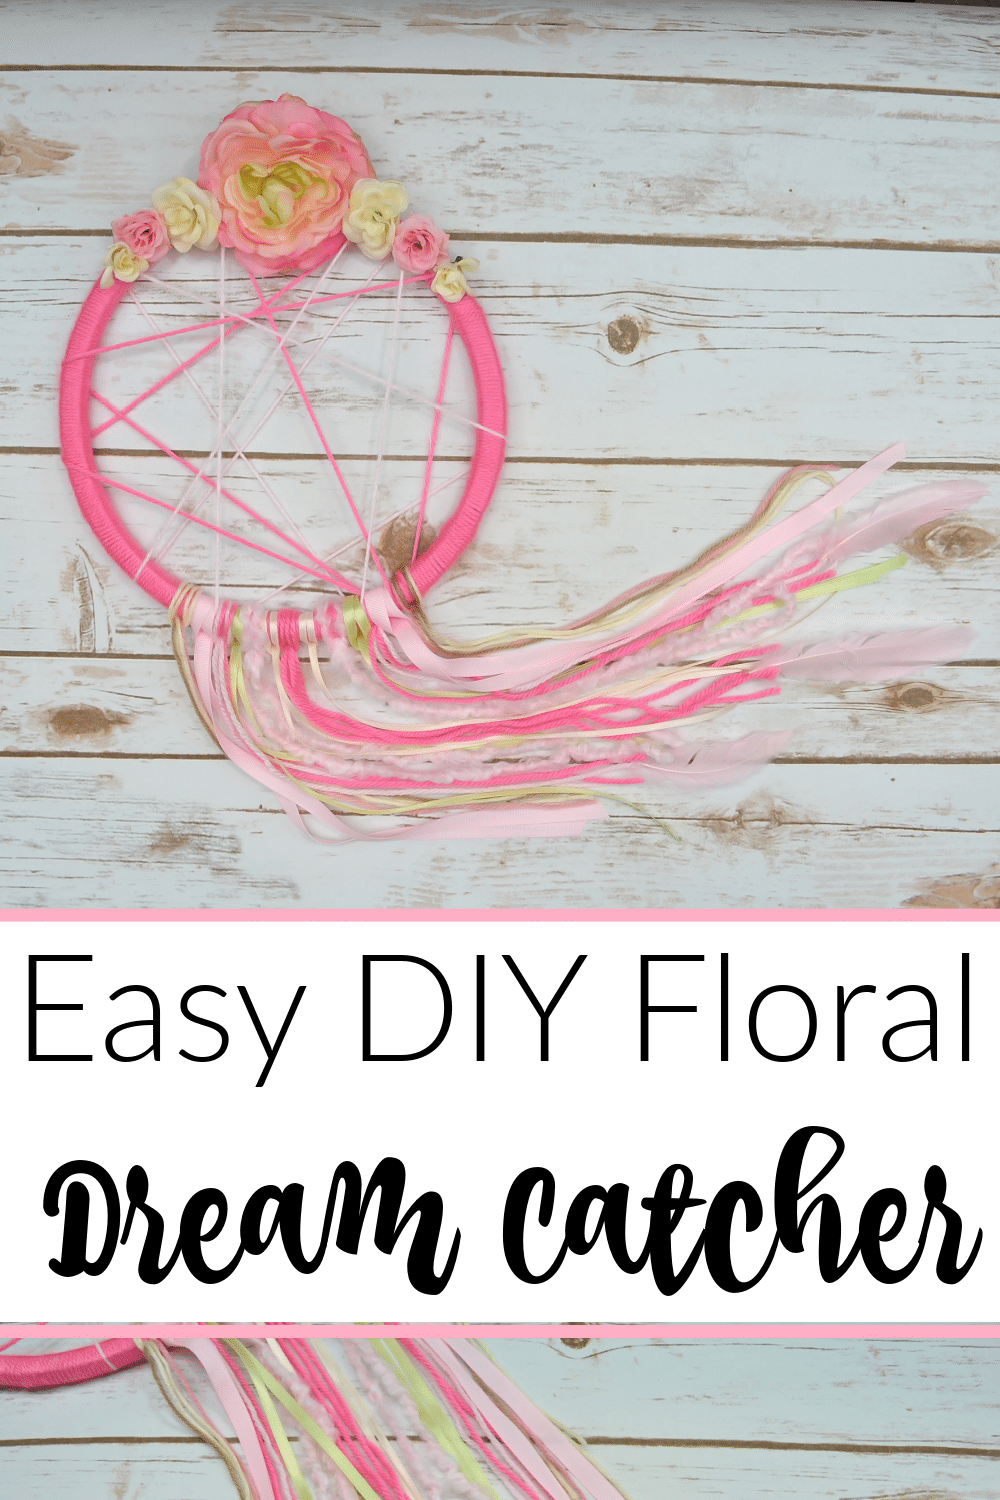 DIY Floral Dream Catcher Kit- Make your own dreamcatcher